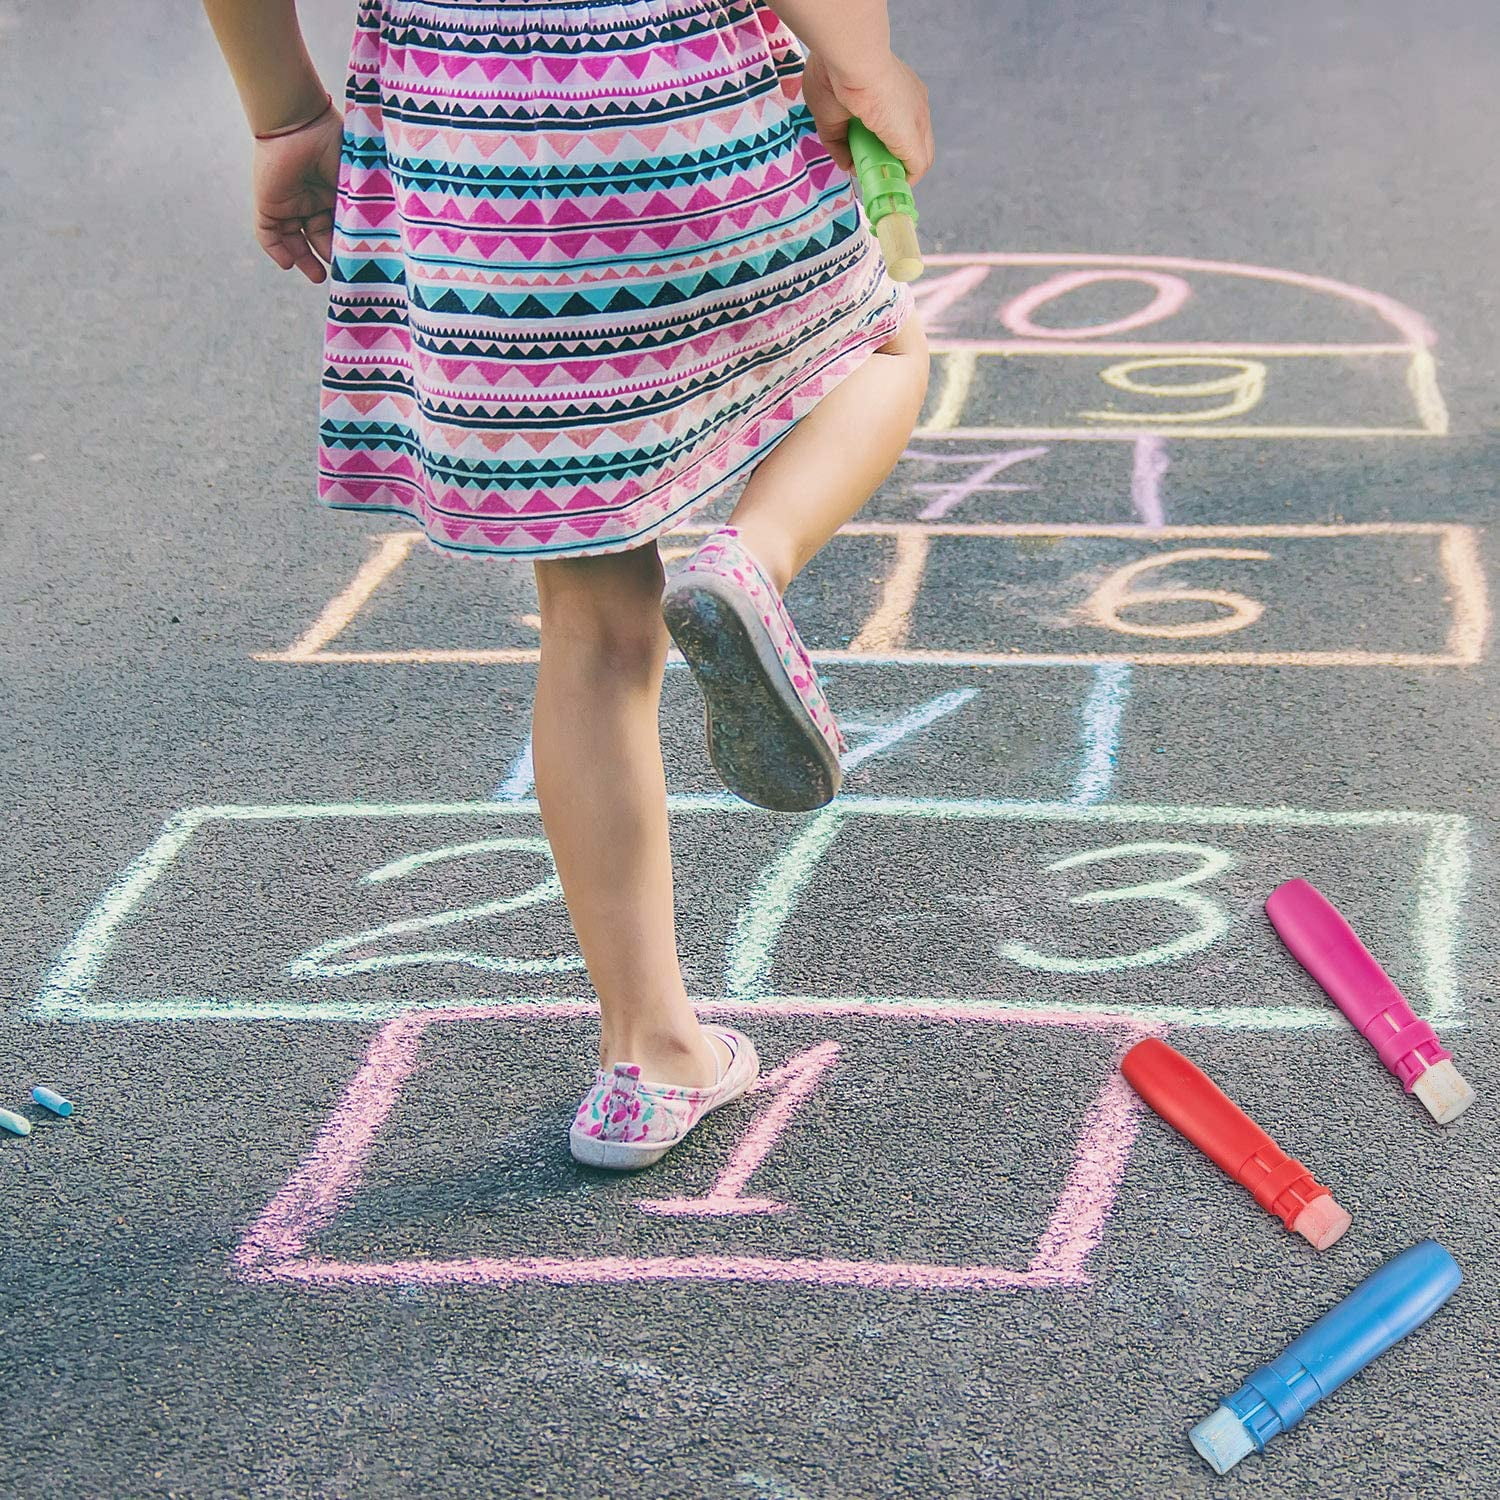 10 Pieces Railroad Chalk Holder Plastic Sidewalk Chalk Holders Colored Adjustable Chalk Clip Holder for Teachers Students Office School Classroom 